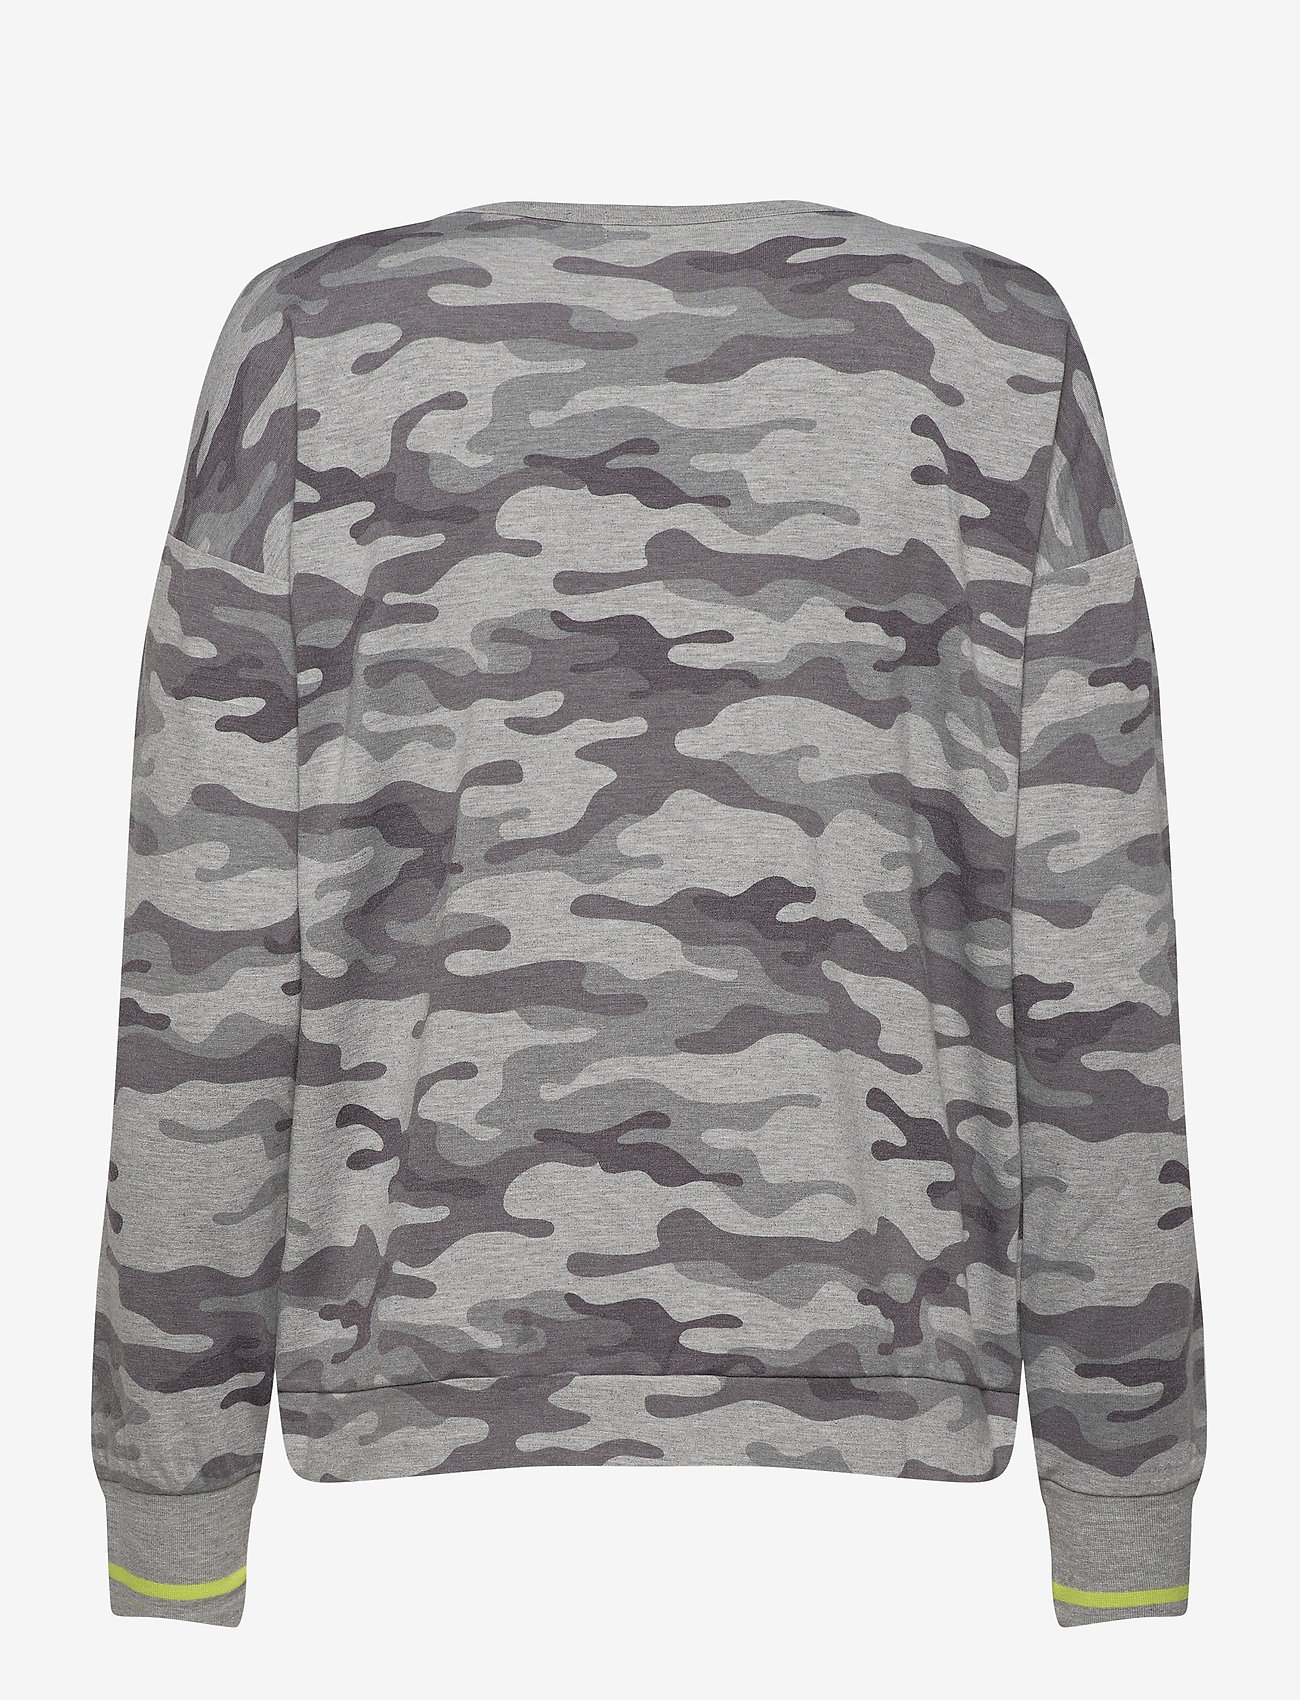 PJ Salvage - l/s shirt - pysjoverdeler - grey - 1